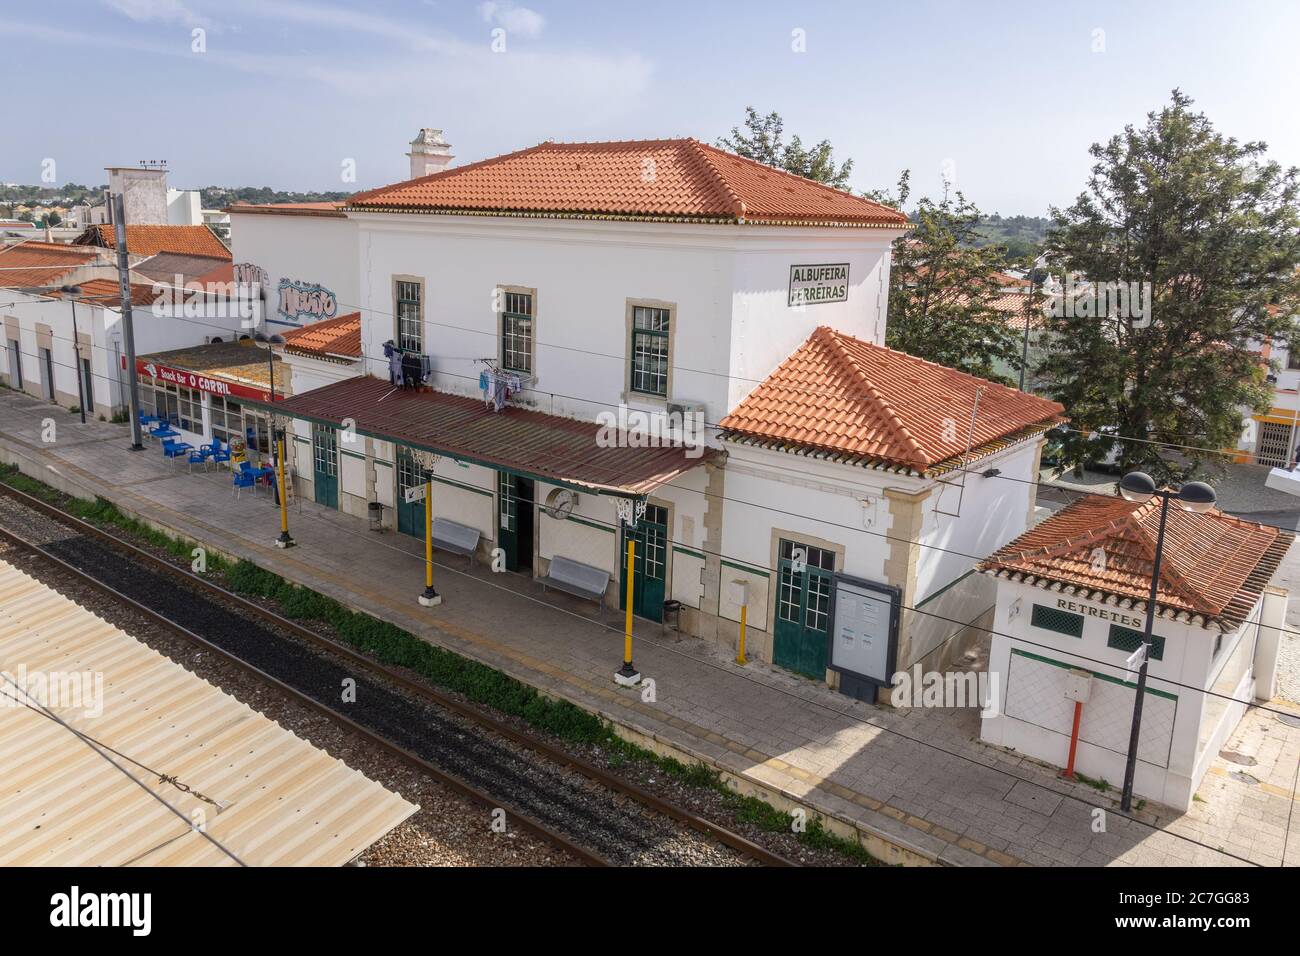 The Albufeira Ferreiras Train Railway Station Building Exterior Platform Rail Line Stock Photo